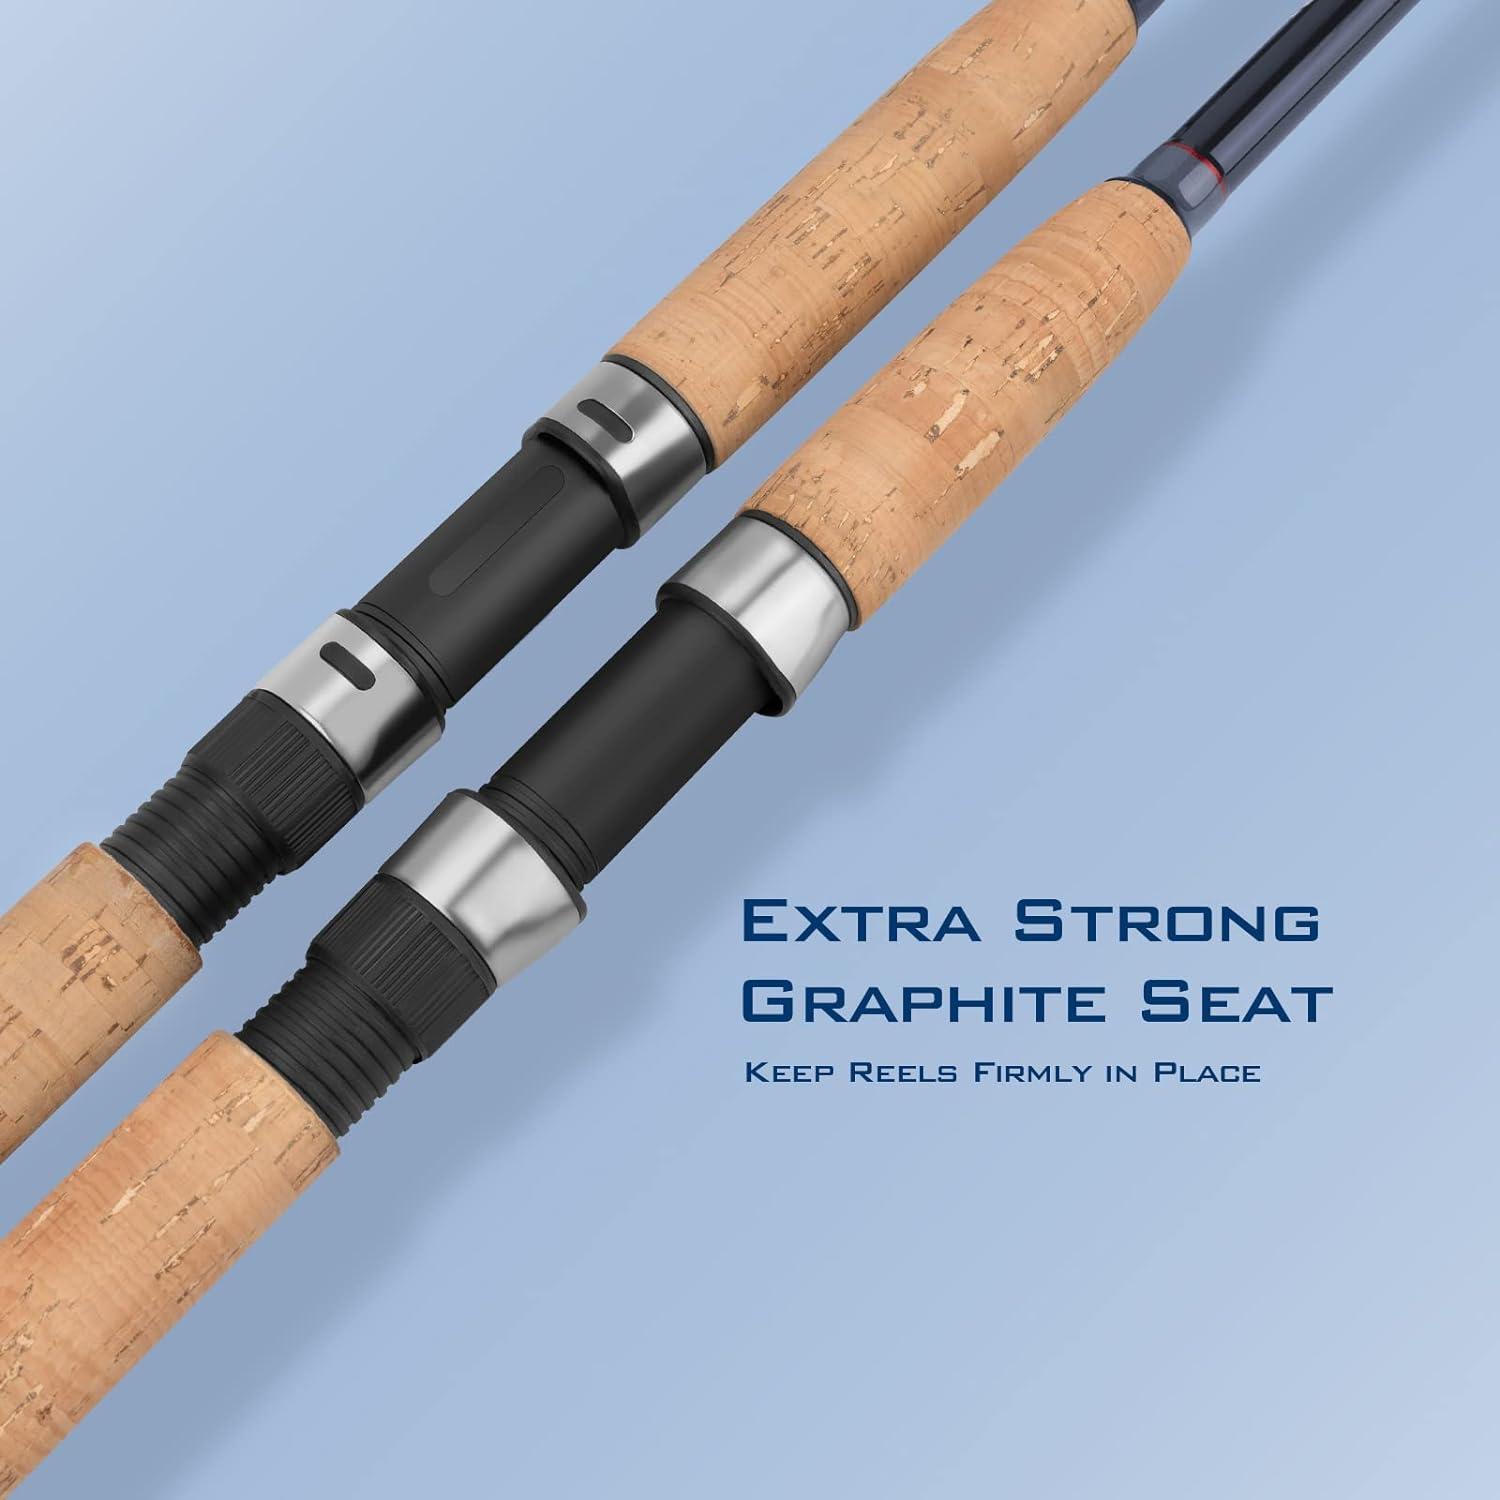 KastKing Progressive Glass Fishing Rods Spinning & Casting Rods